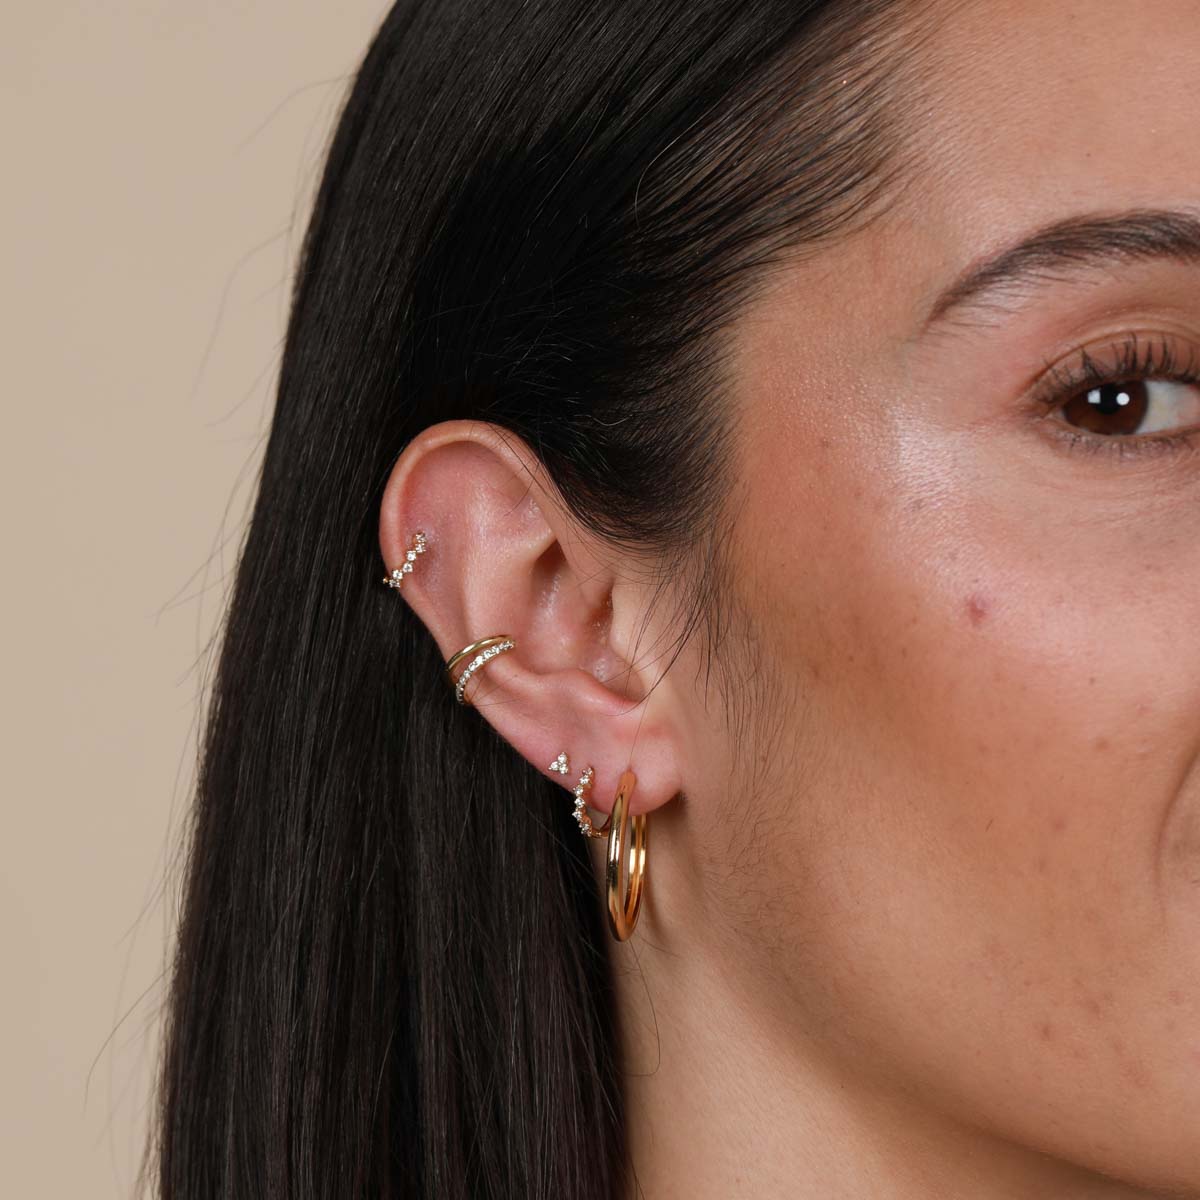 Wholesale High Quality Earrings Colorful Copper Zircon Cartilage Hoop Helix  Earring Upper Ear Piercing earrings Jewelry From malibabacom